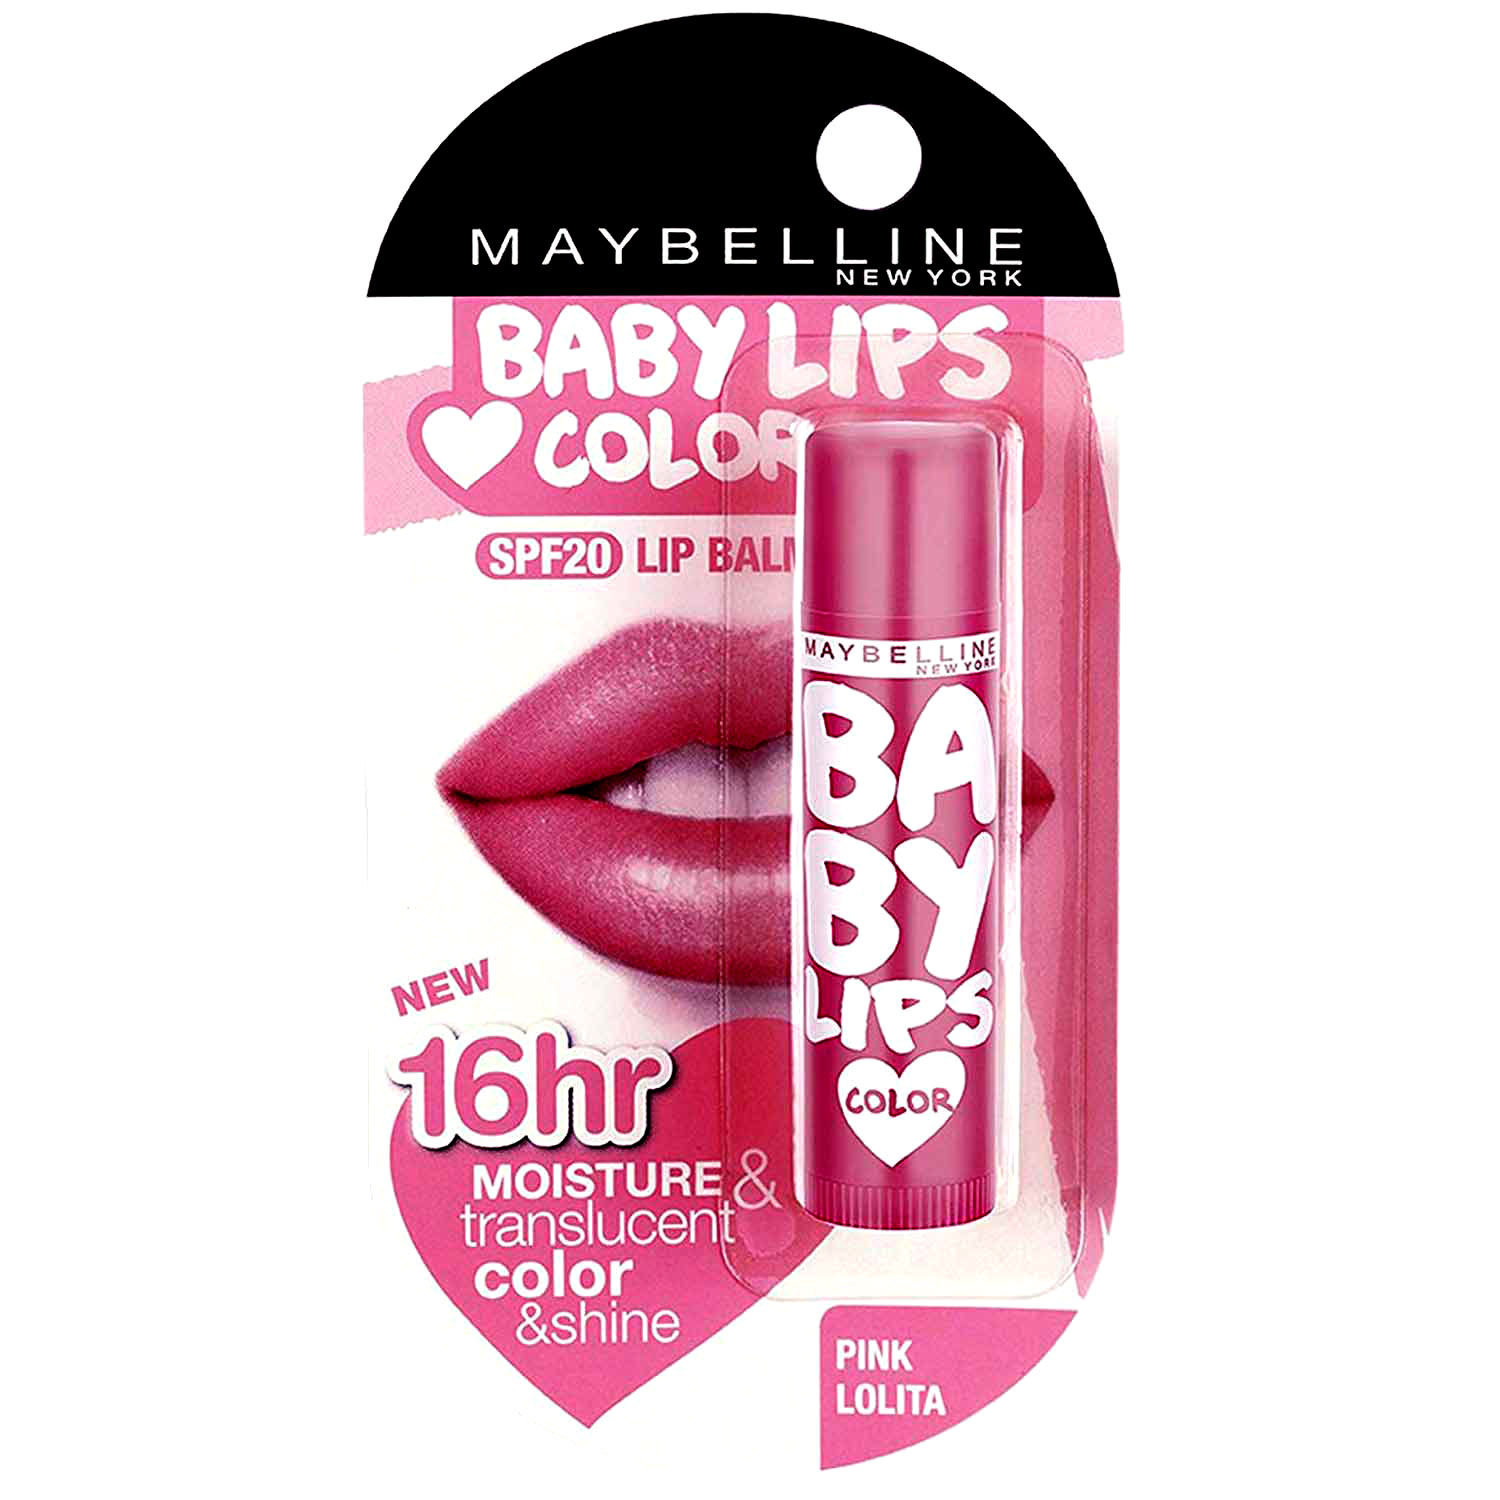 Maybelline New York Baby Lips Lip Balm, Pink Lolita, 4g, Pack of 1 